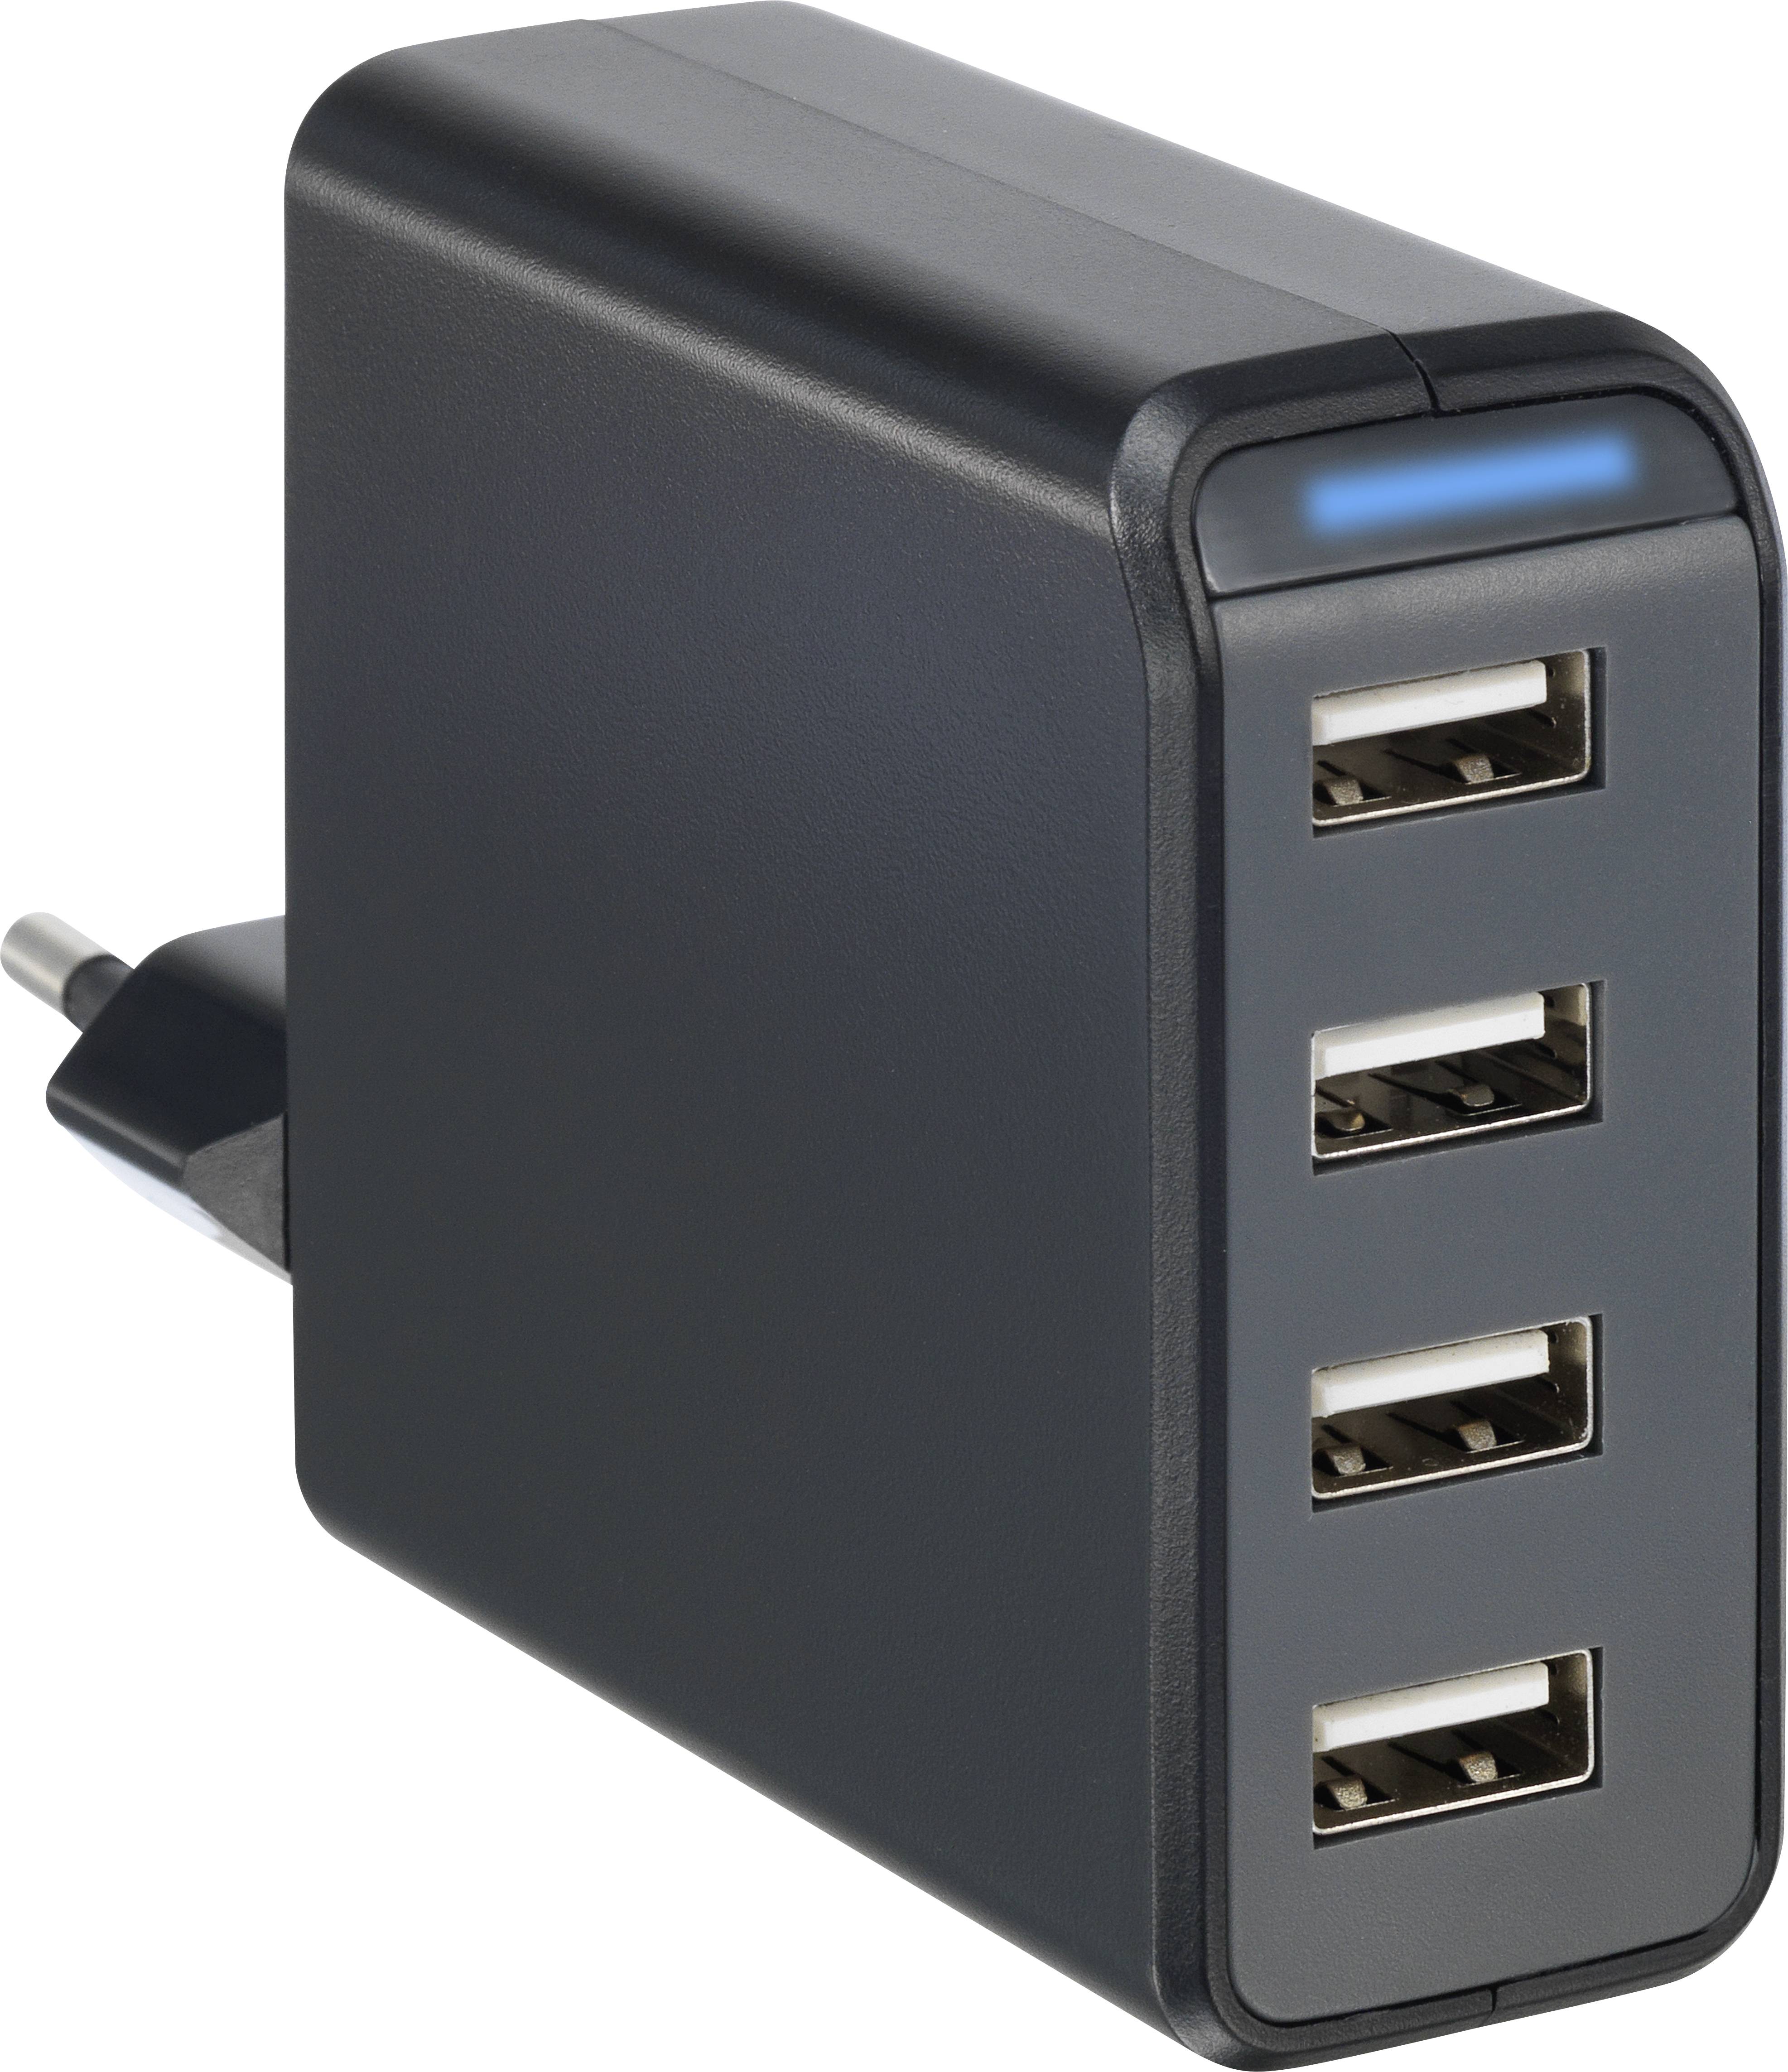 CONRAD VOLTCRAFT SPAS-4800/4-N USB-Ladegerät Steckdose Ausgangsstrom (max.) 4800 mA 4 x USB